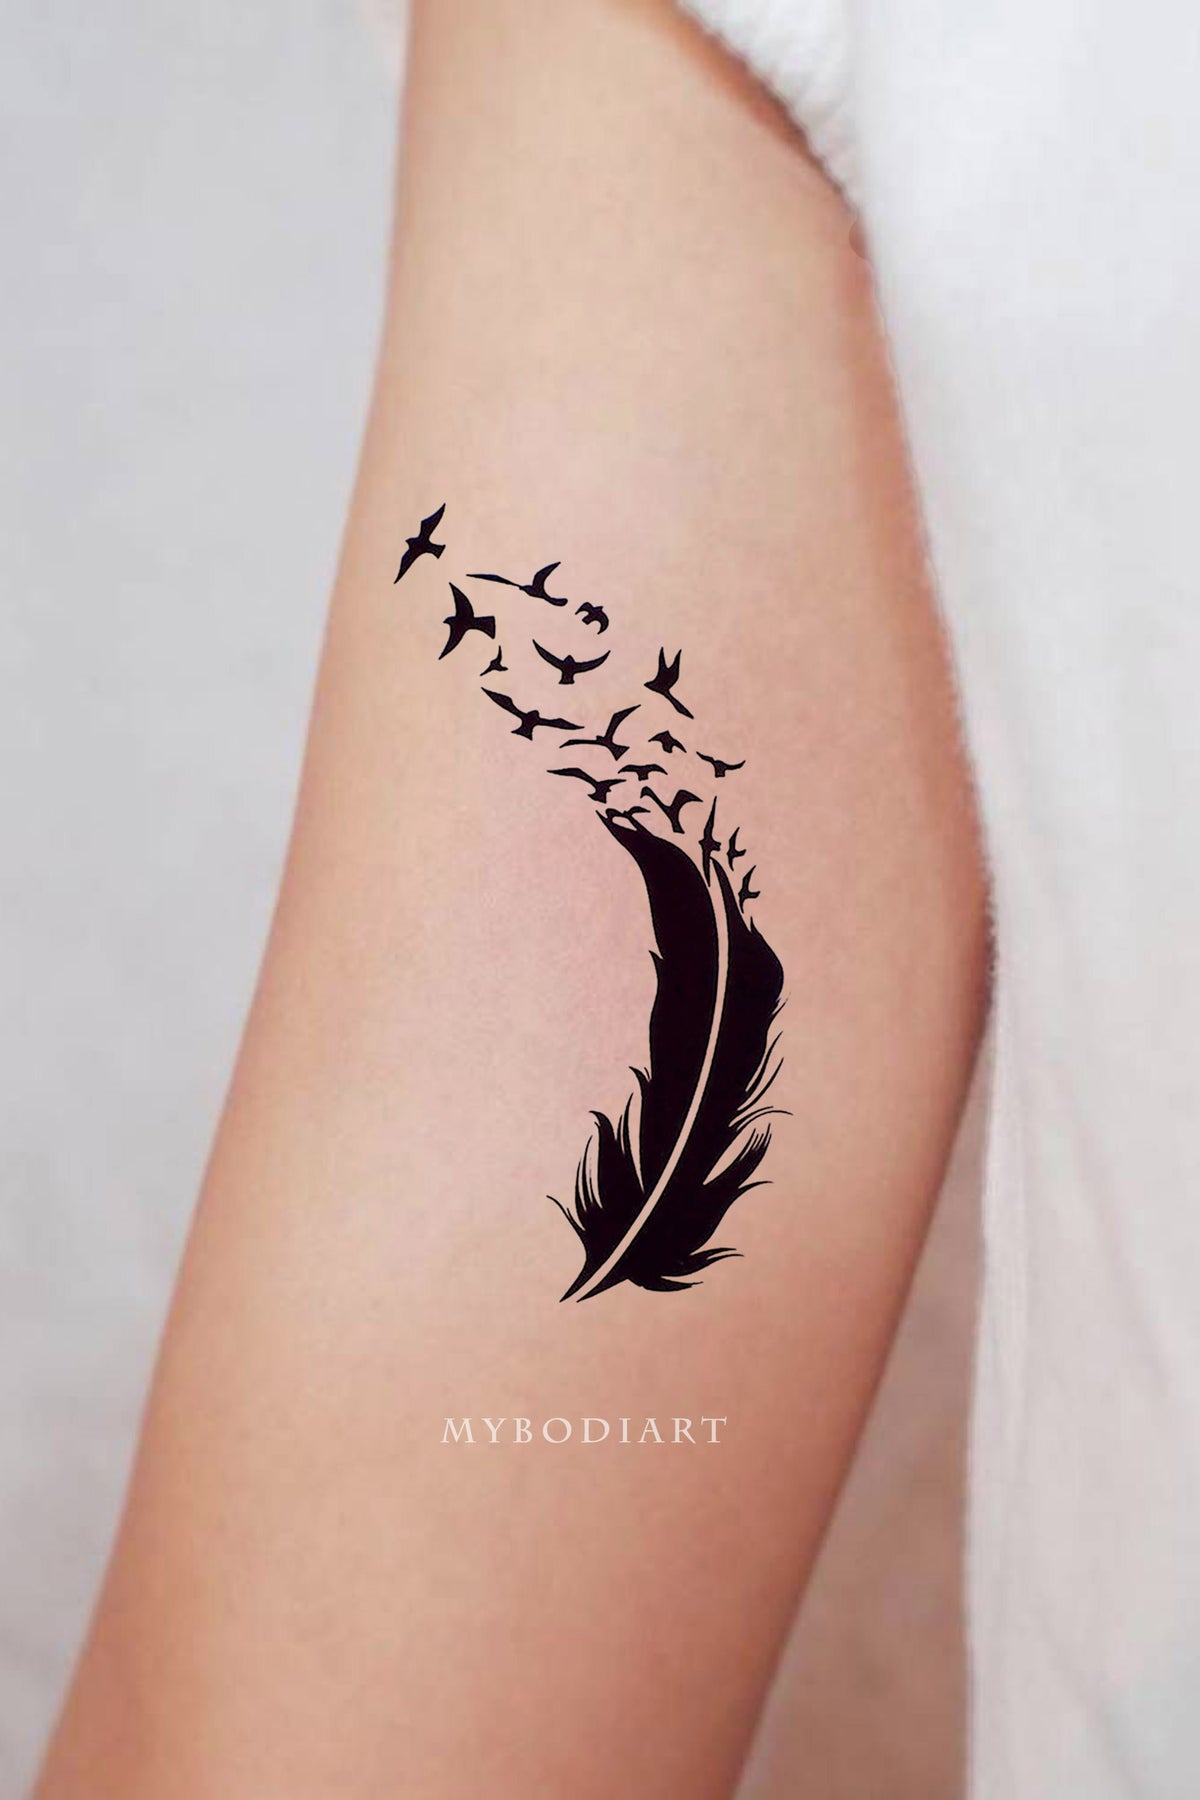 Pin by silvana on tatoo | Small bird tattoos, Sleeve tattoos, Small bird  tattoo